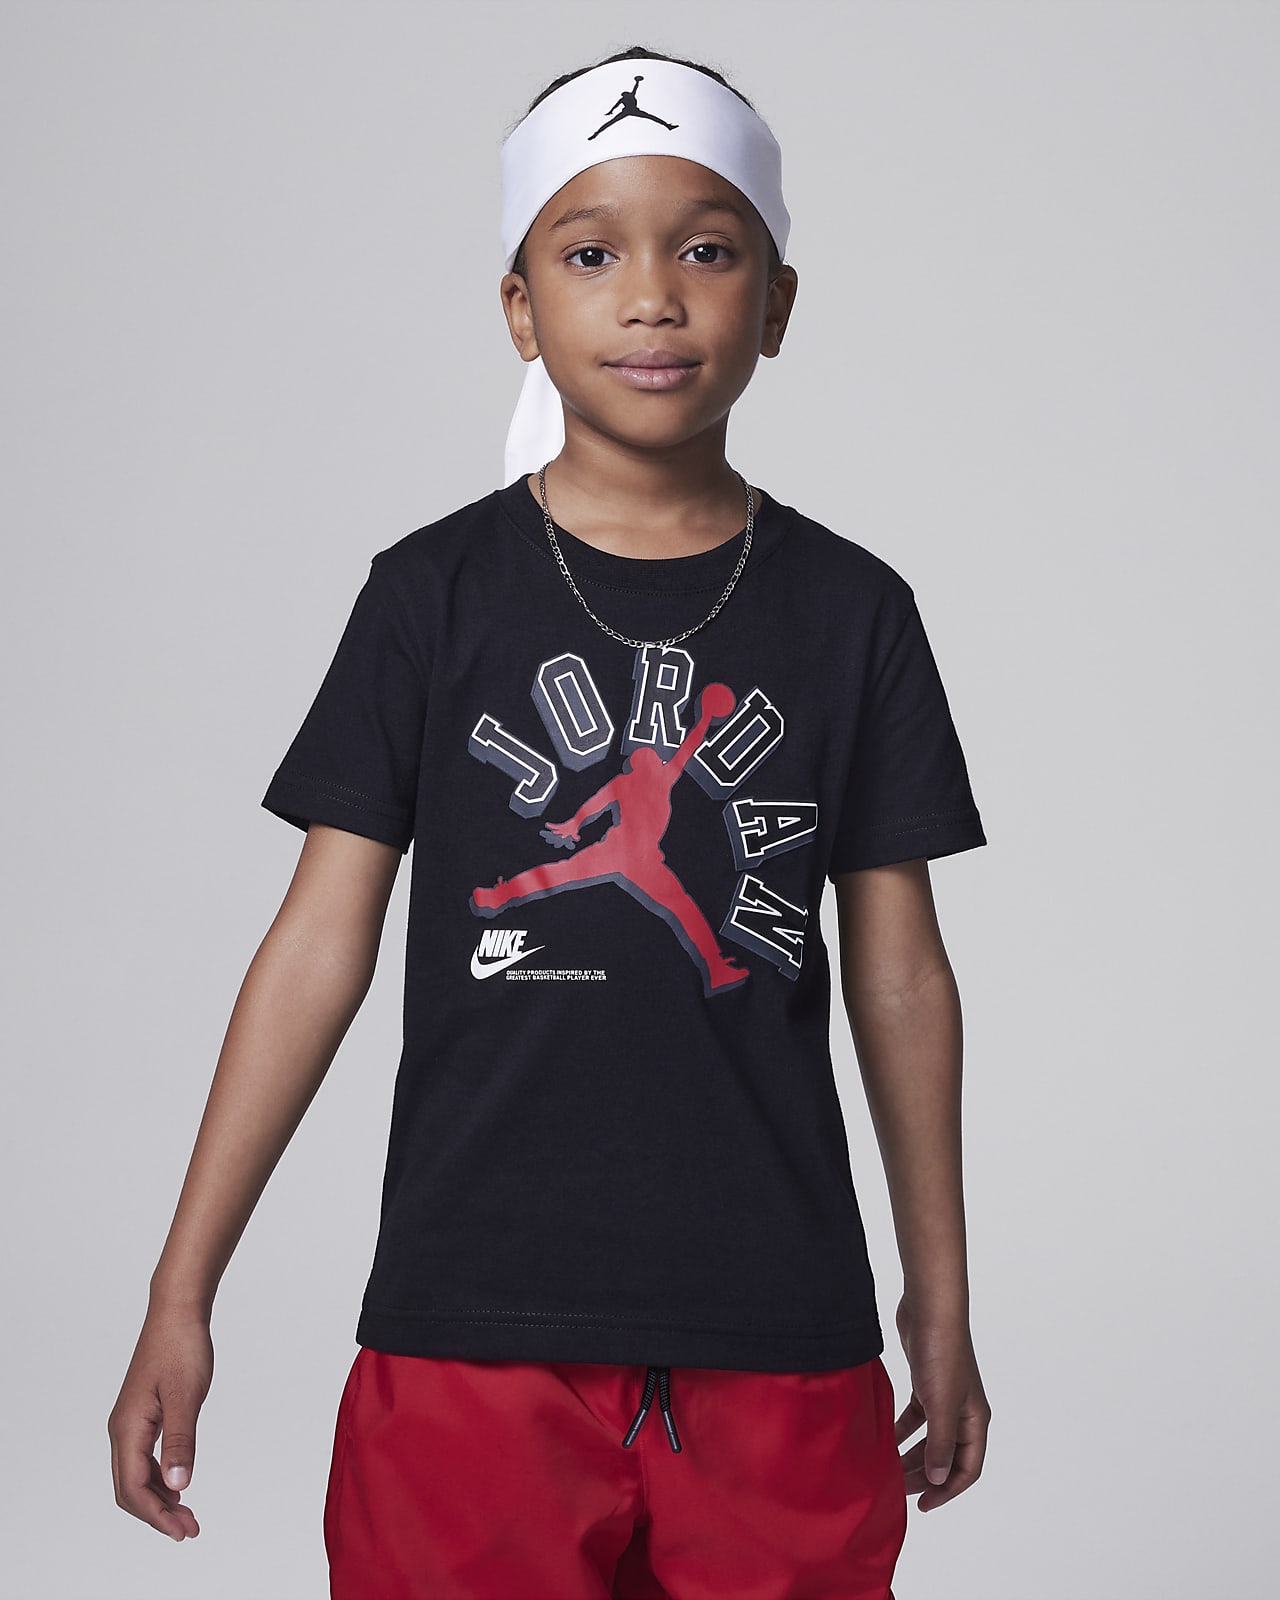 Jordan Varsity Jumpman Camiseta - Niño/a pequeño/a